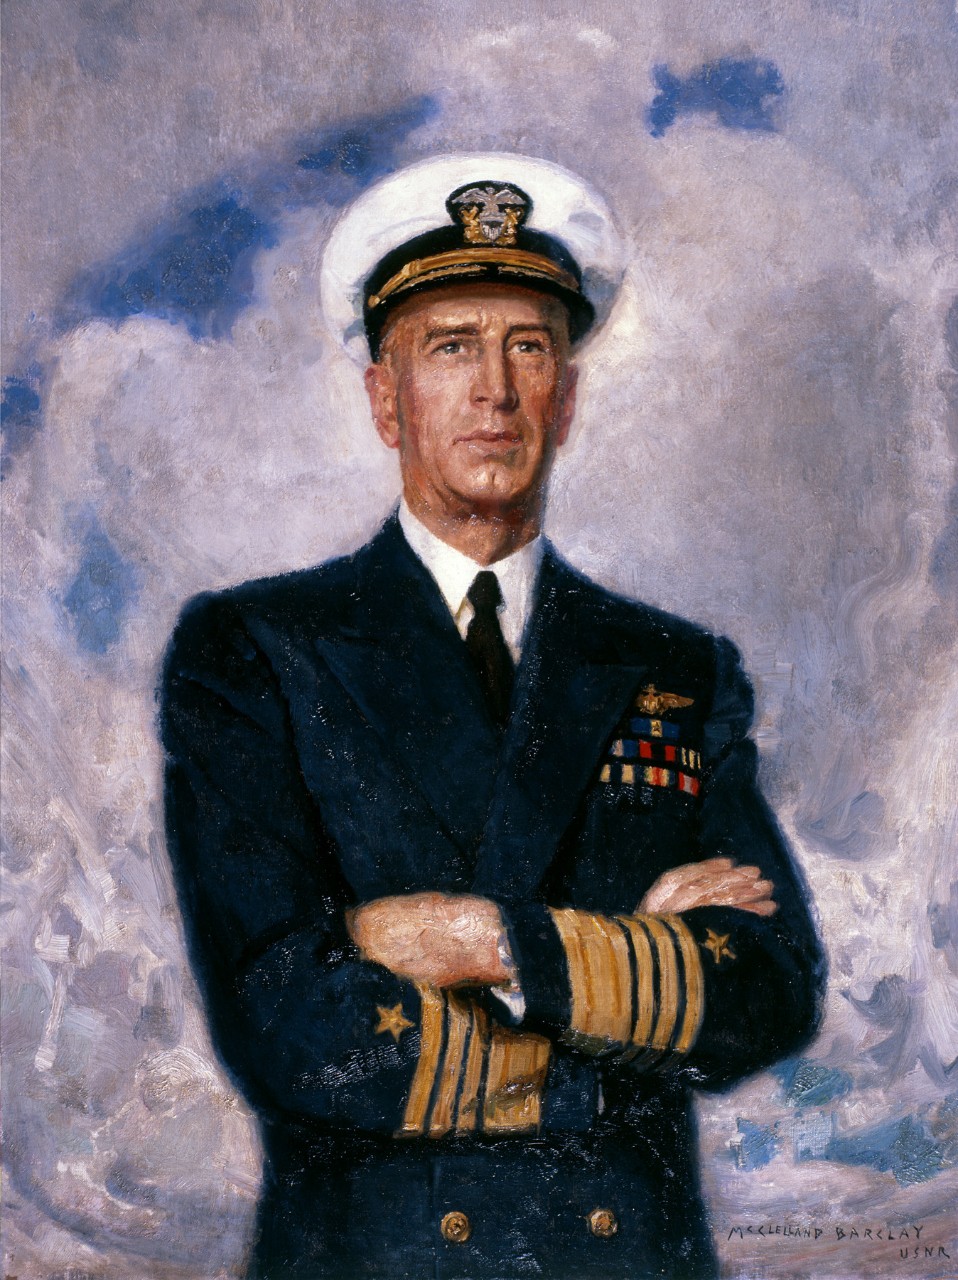 Fleet Admiral Ernest J. King, U.S.N. in dress blue uniform